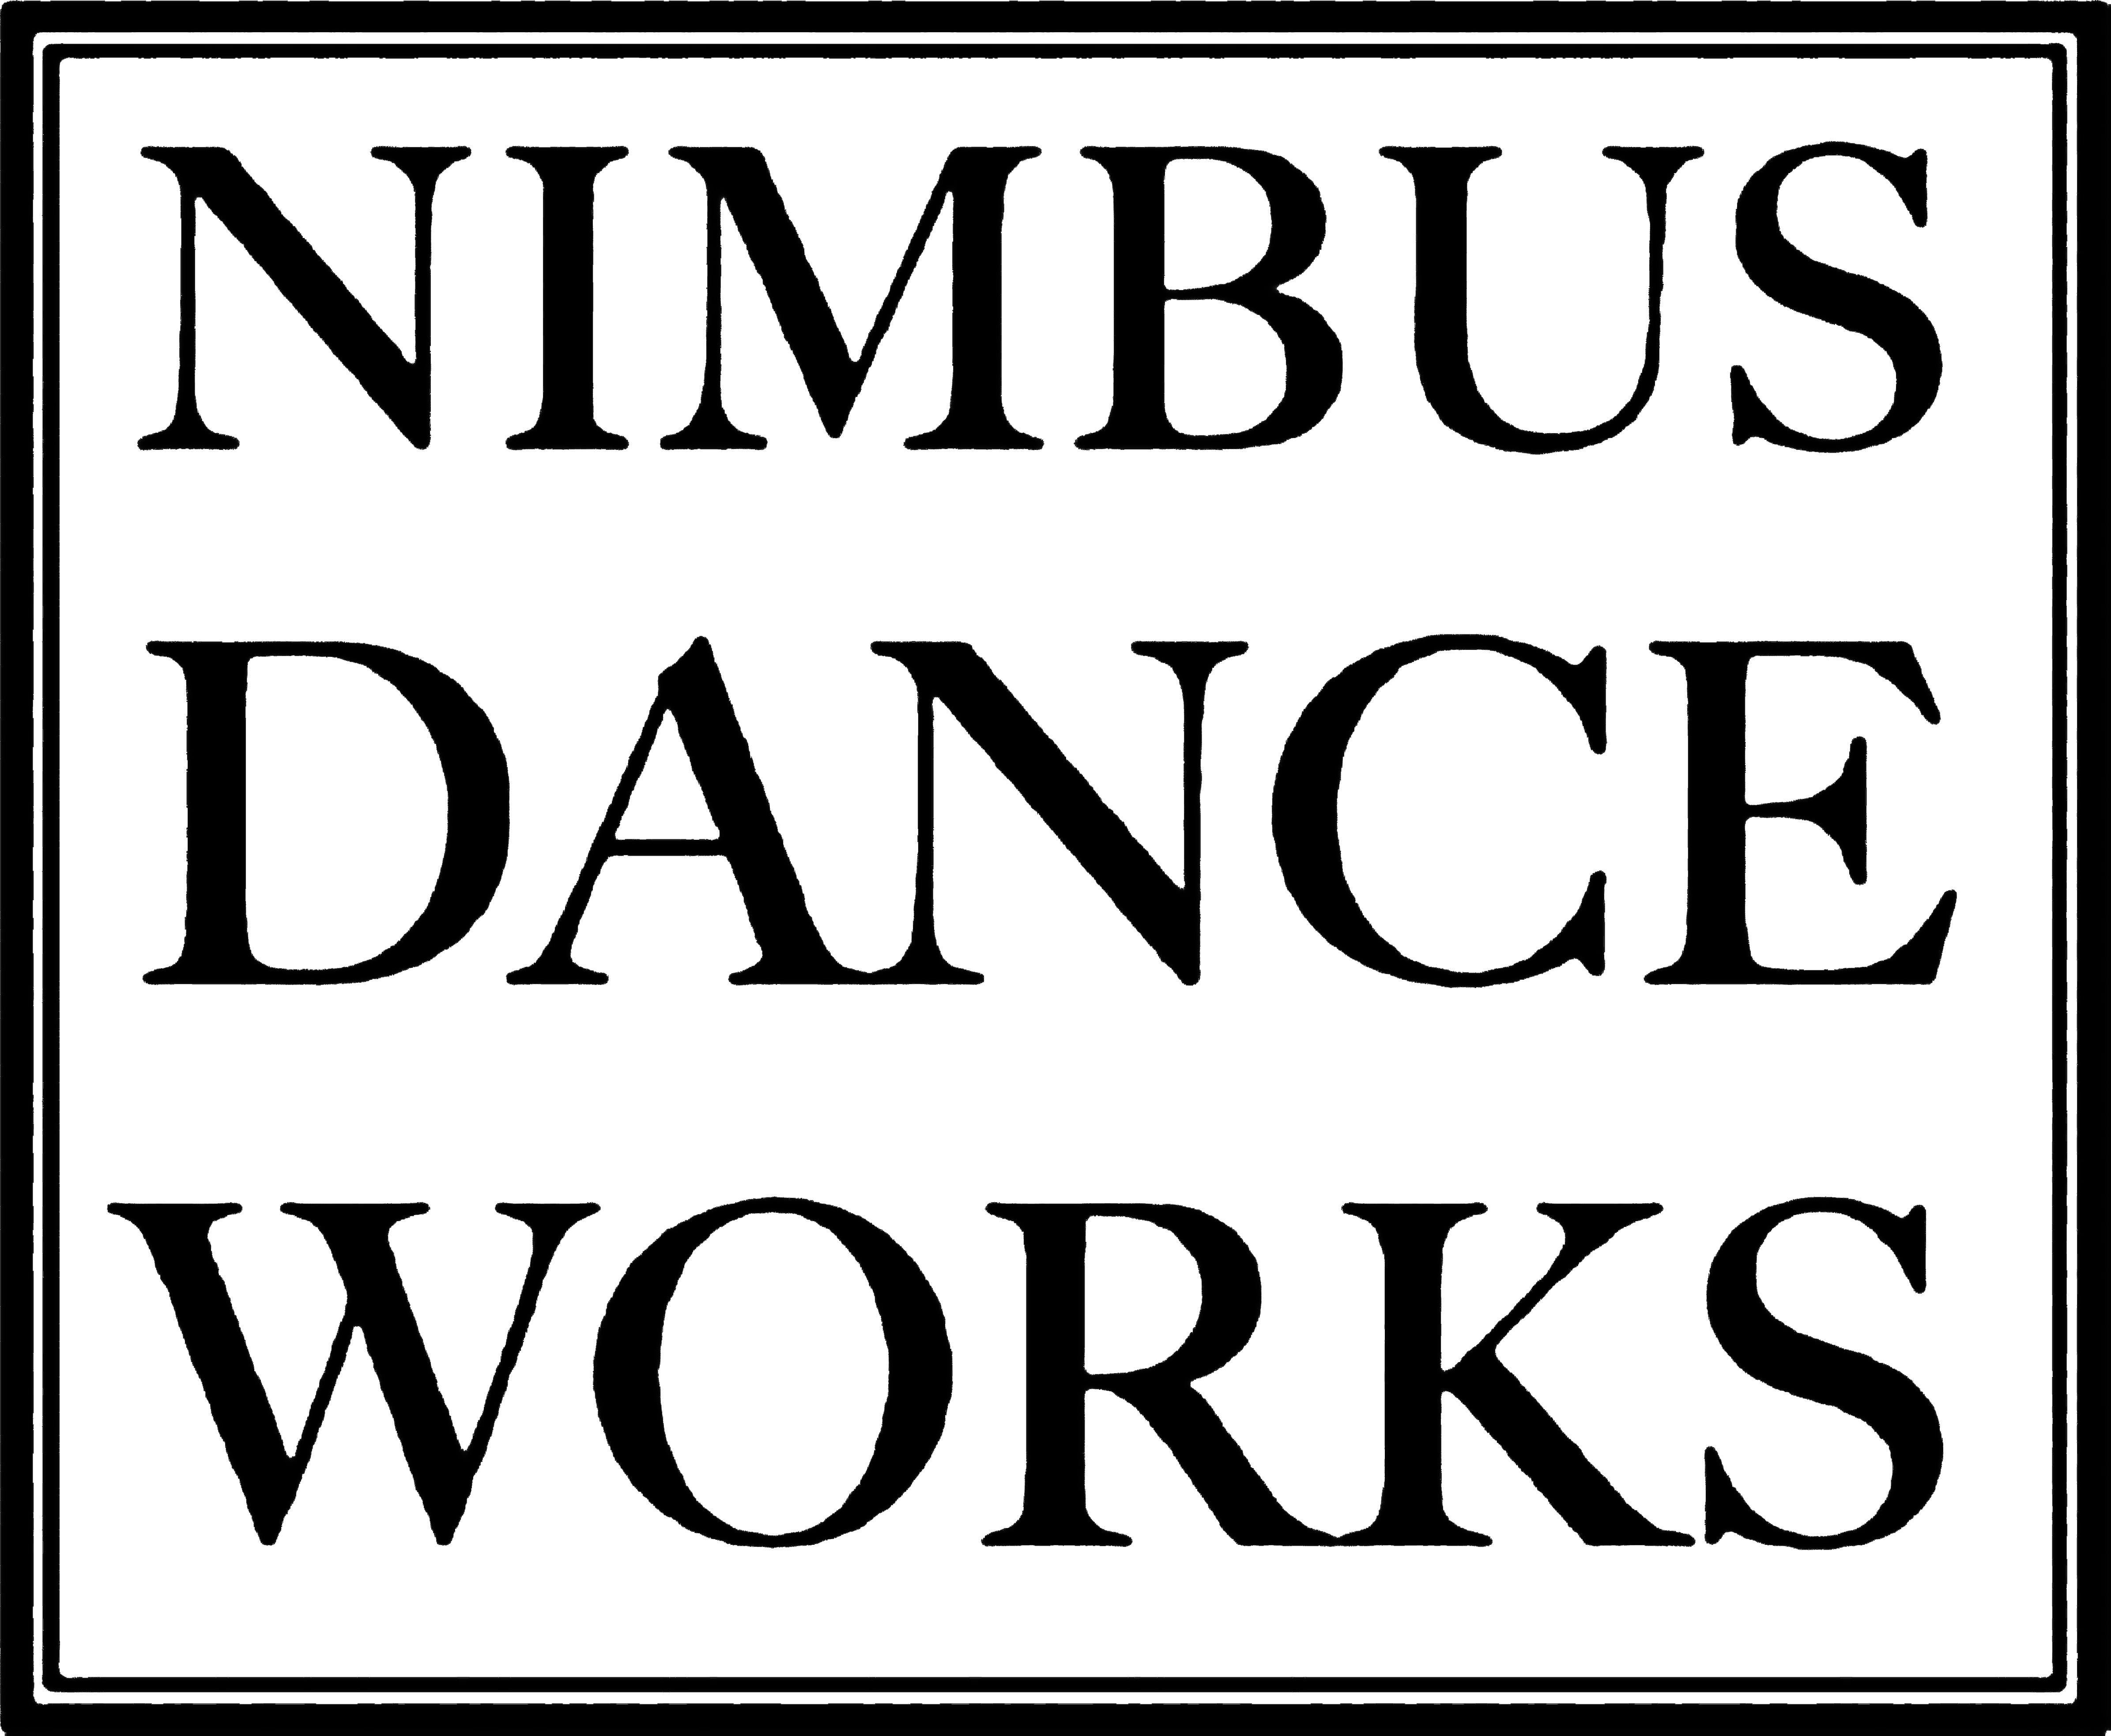 Nimbus Dance Works